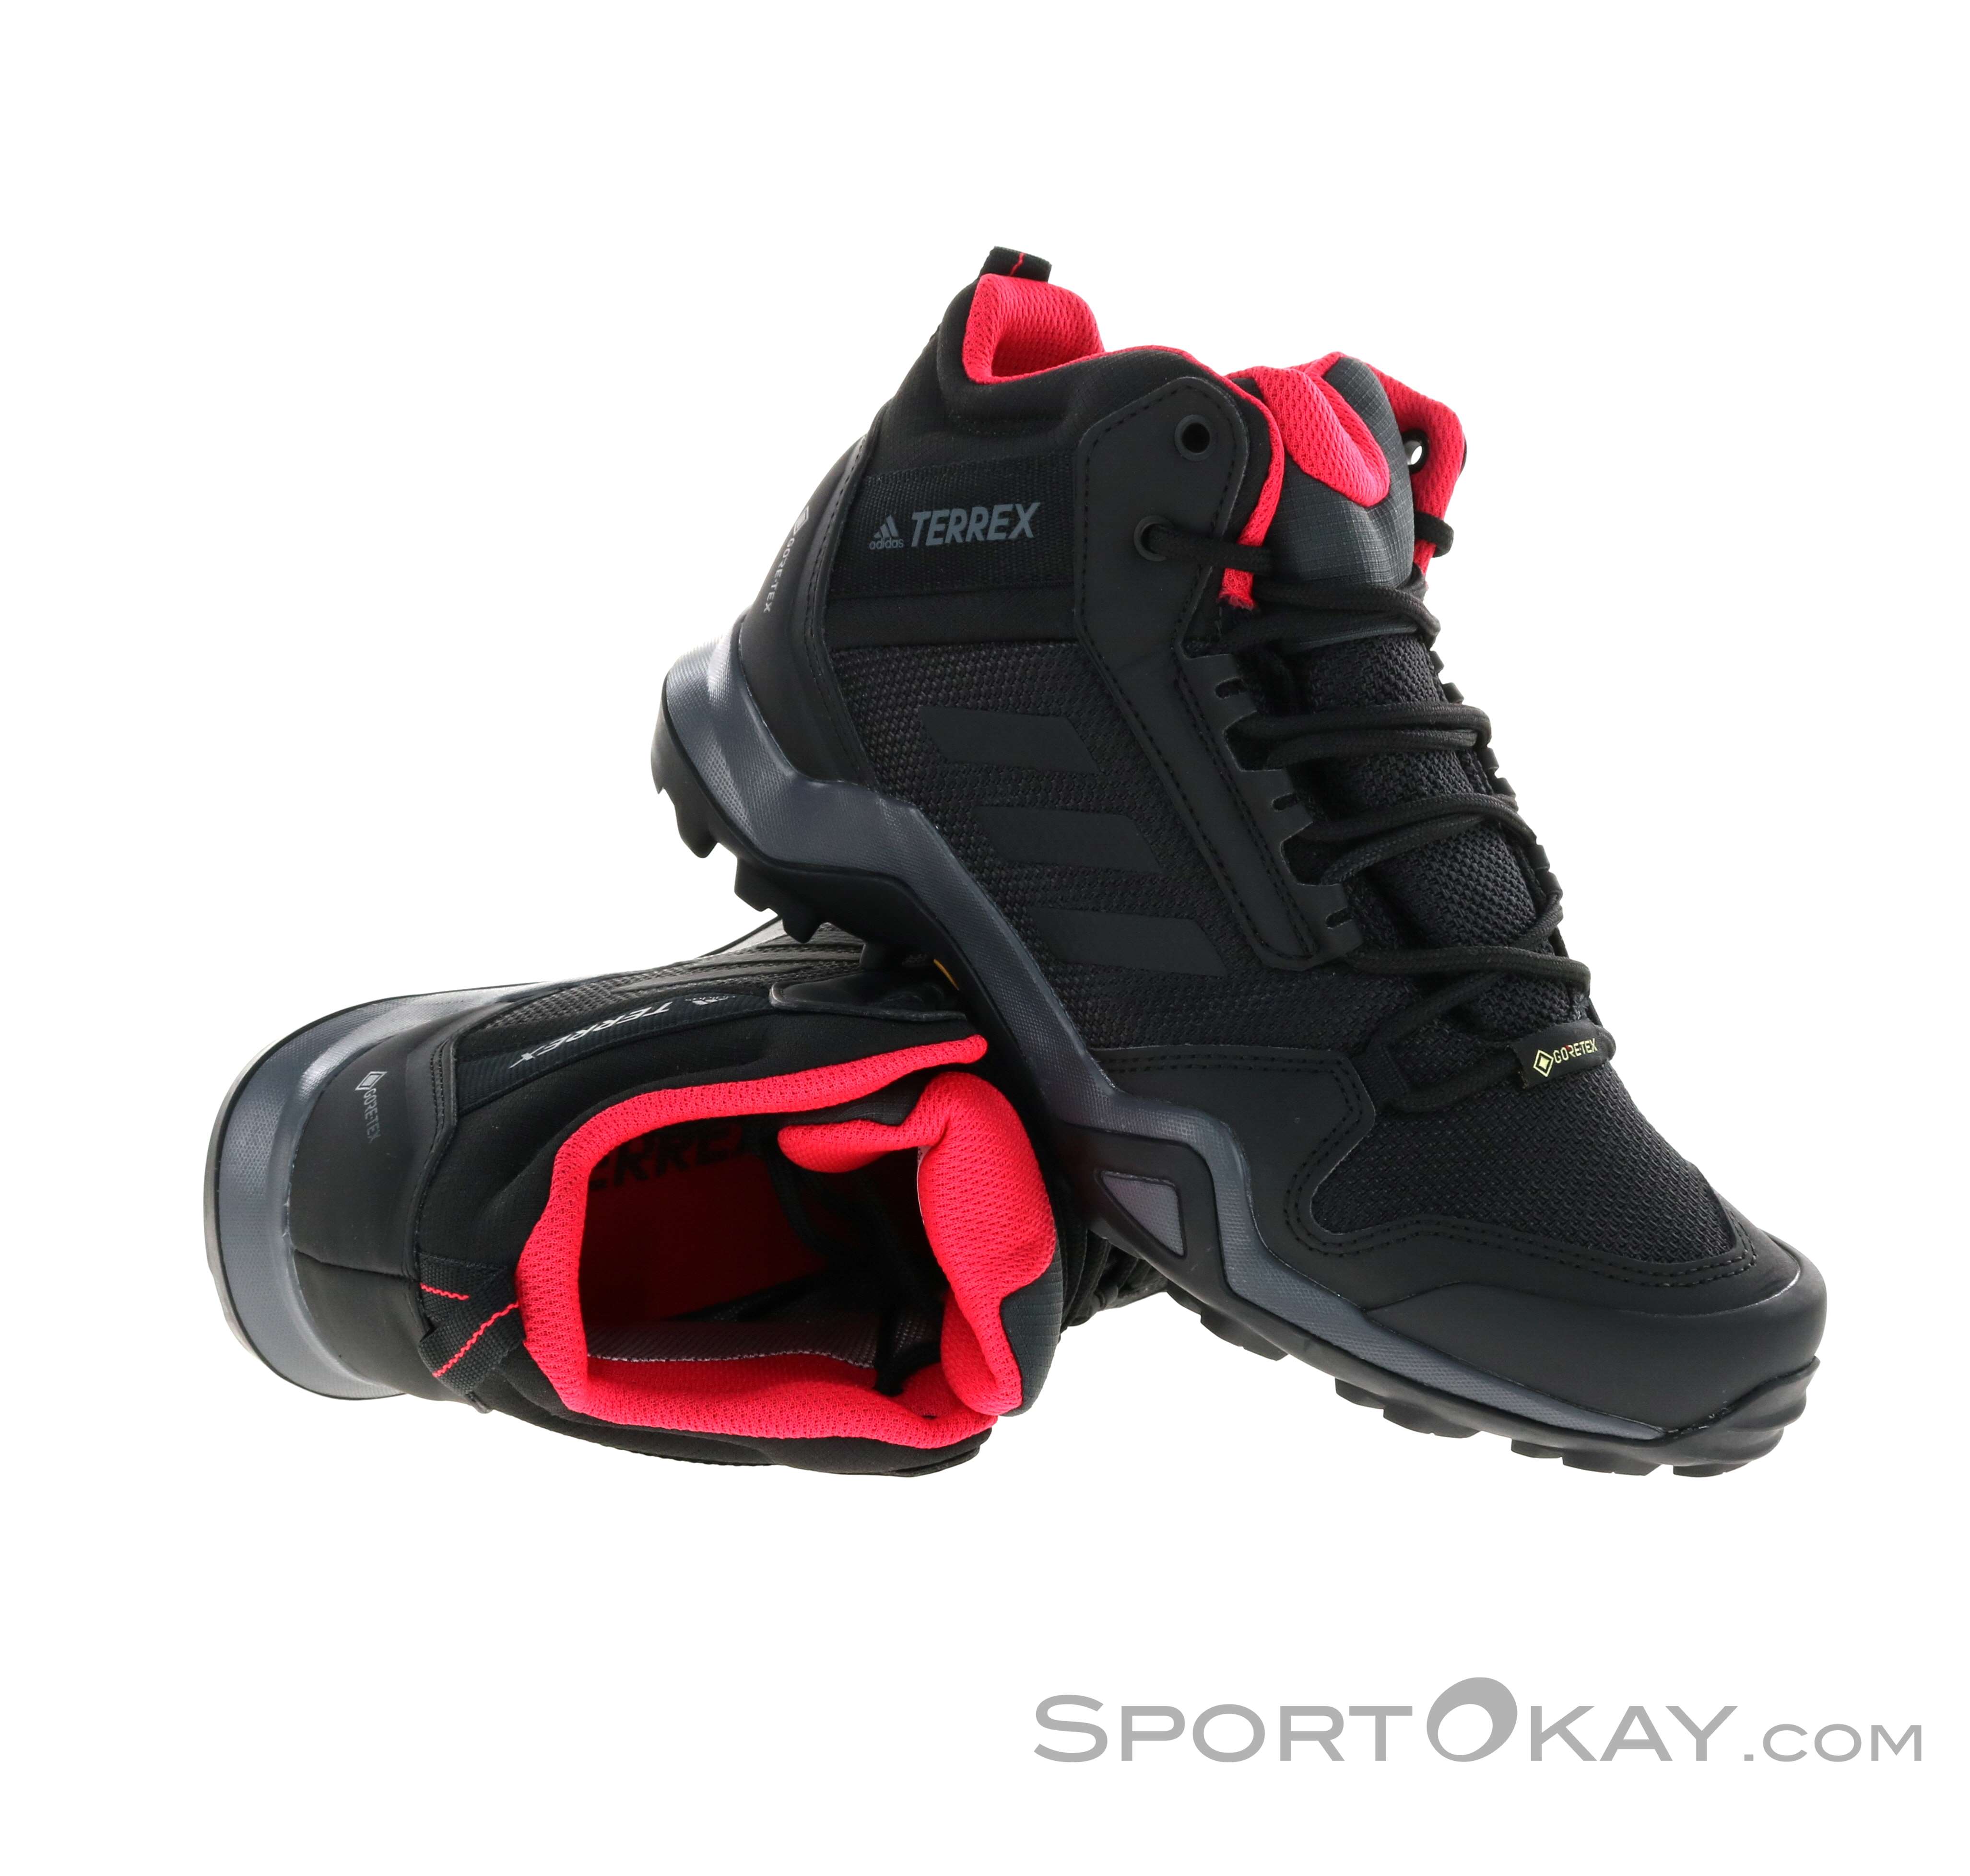 adidas terrex ax3 mid gtx womens hiking shoes